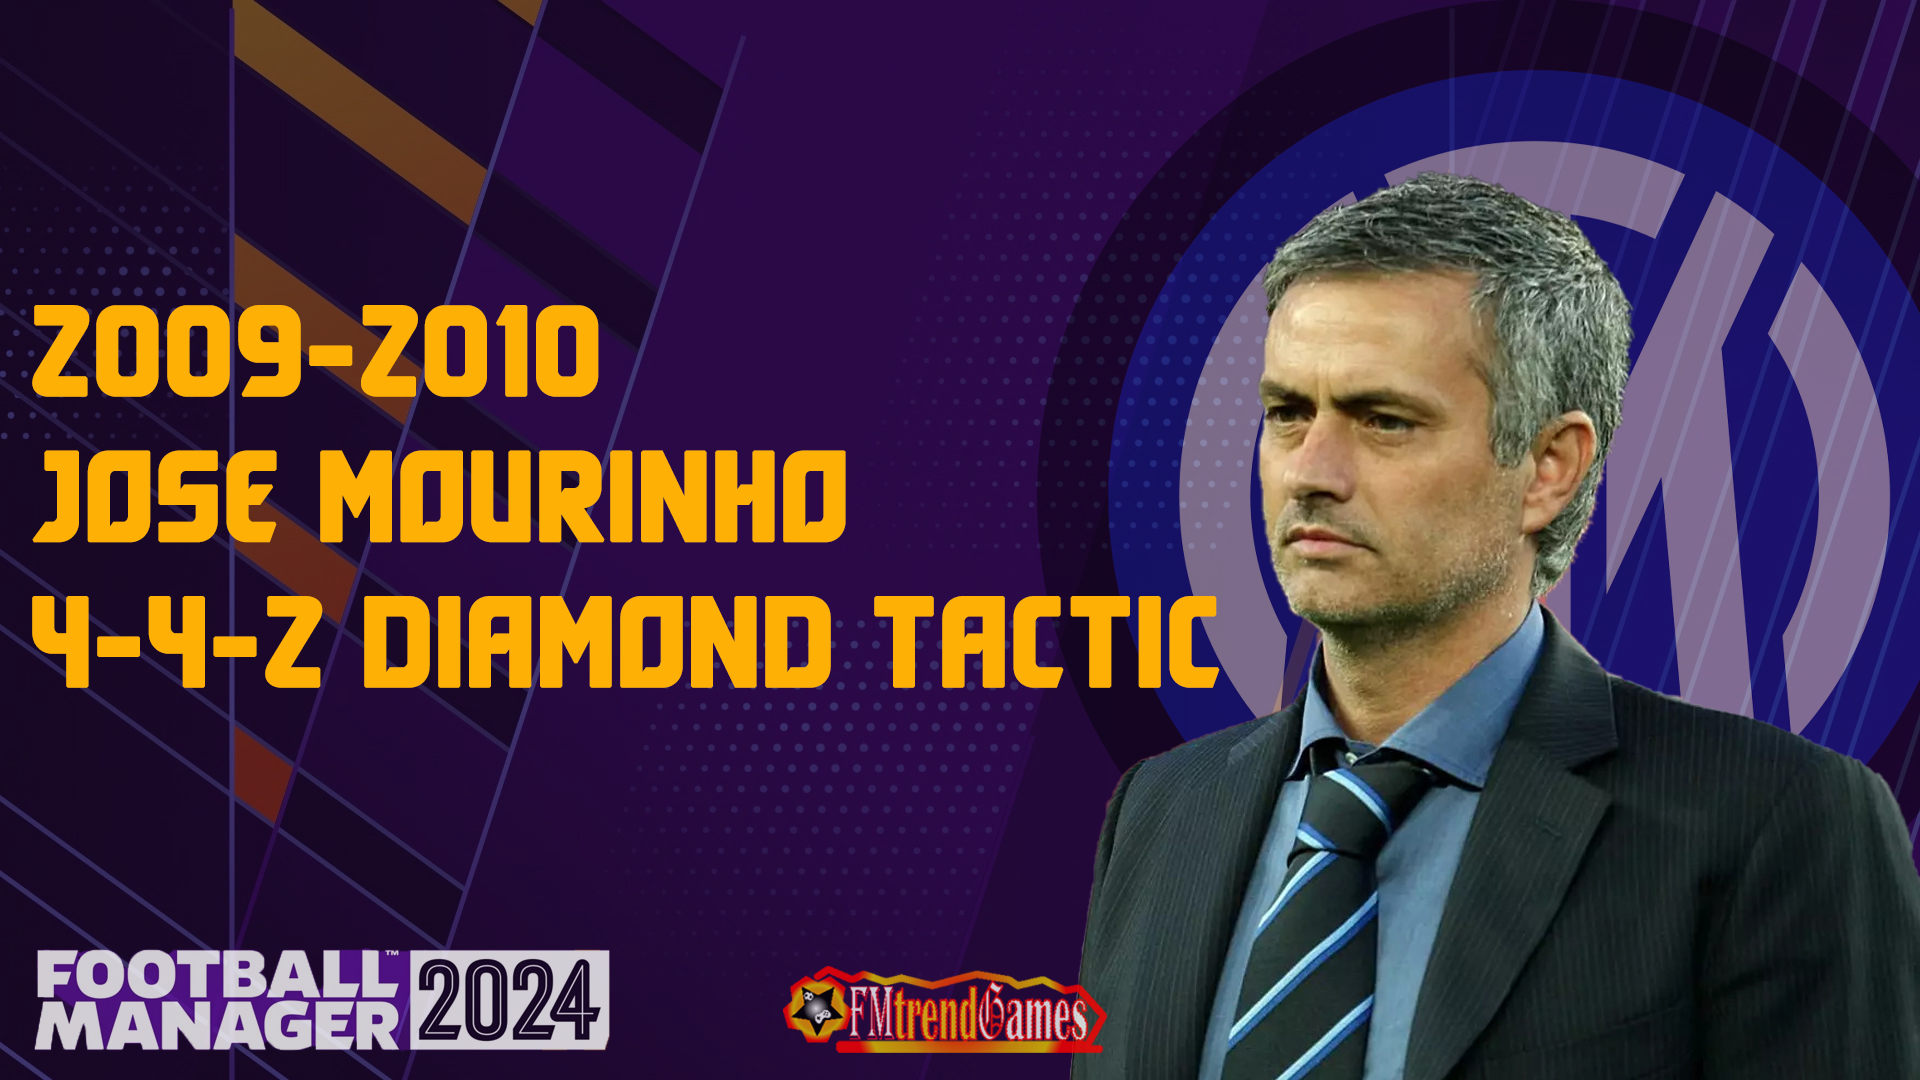 2009-2010 Jose Mourinho 4-4-2 Diamond Tactic